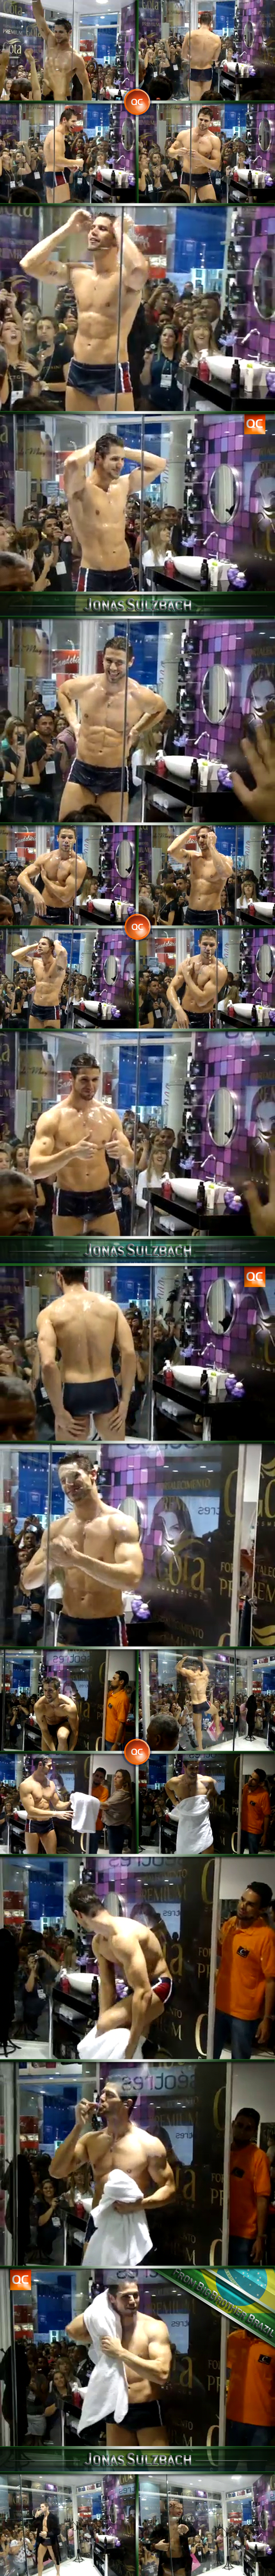 Jonas Sulzbach Showering in Public!